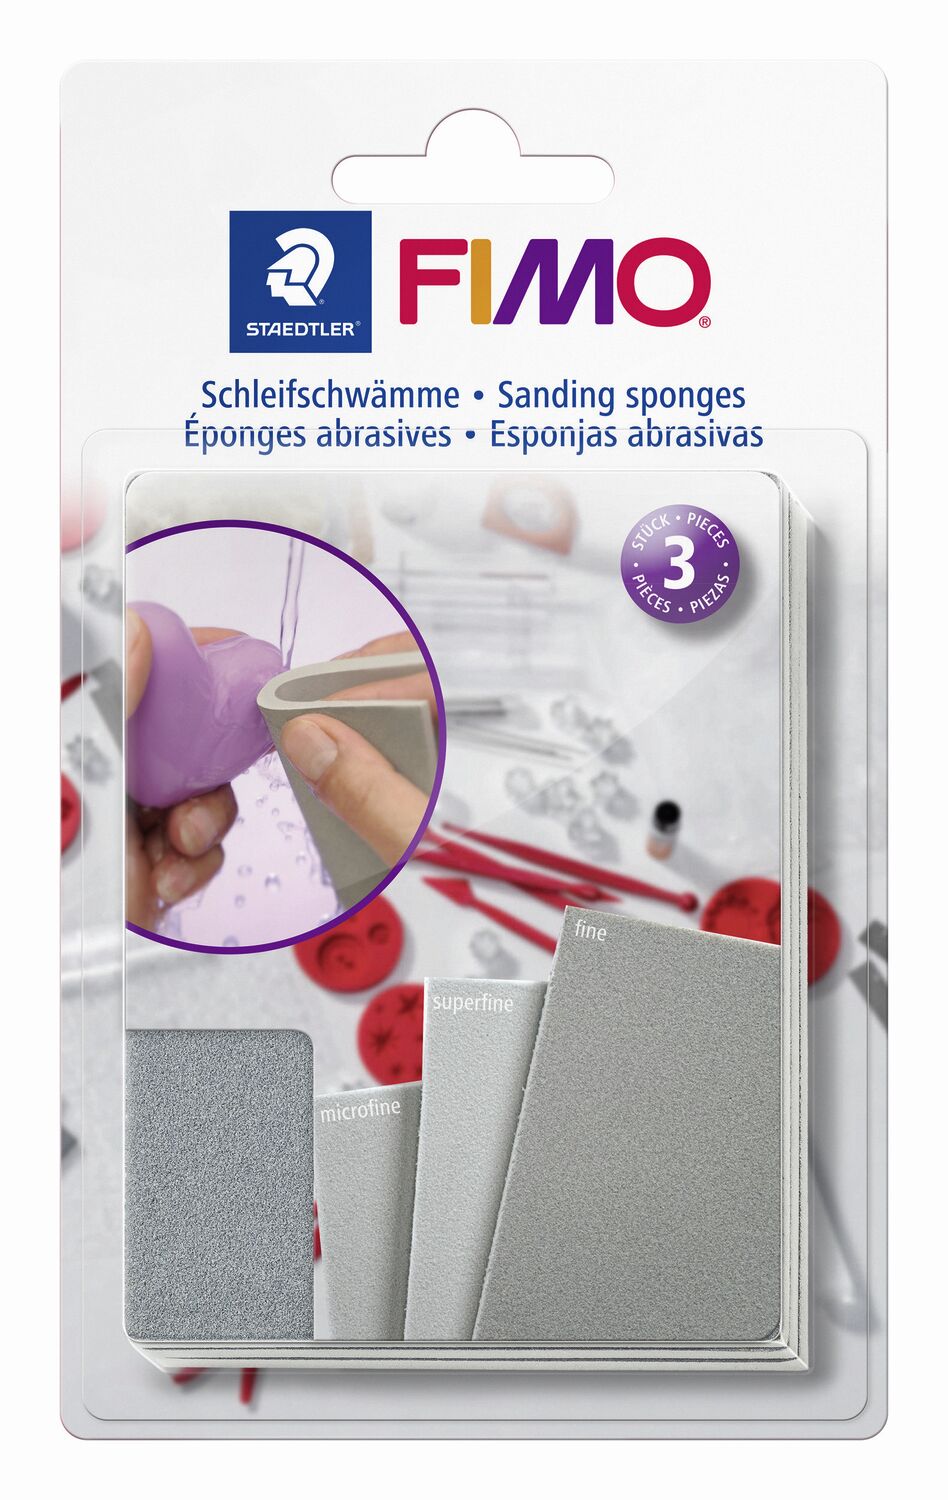 FIMO® 8700 08 - Grind'n polish set